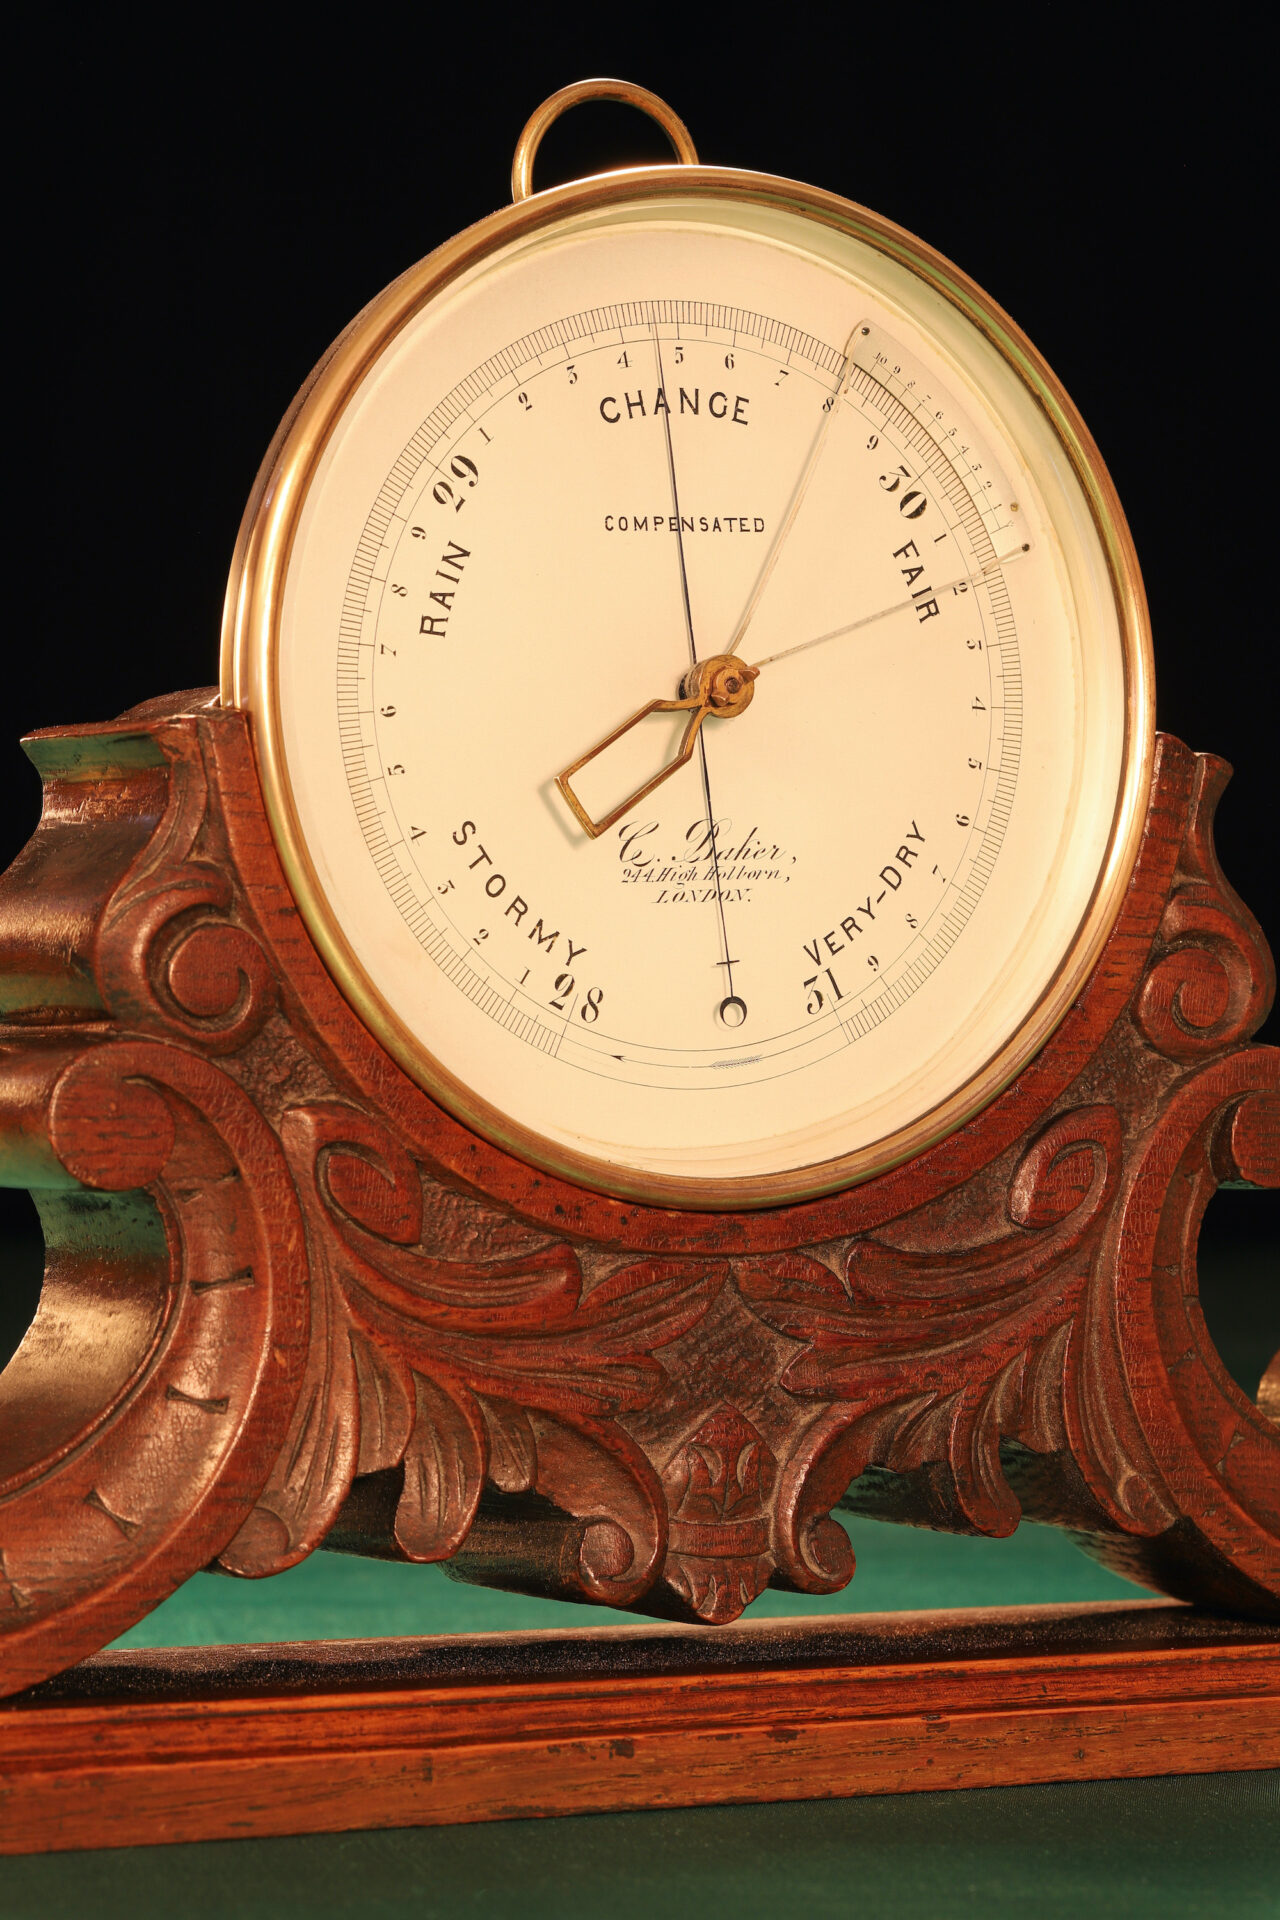 Close up of dial of Charles Baker Mantle Barometer c1909